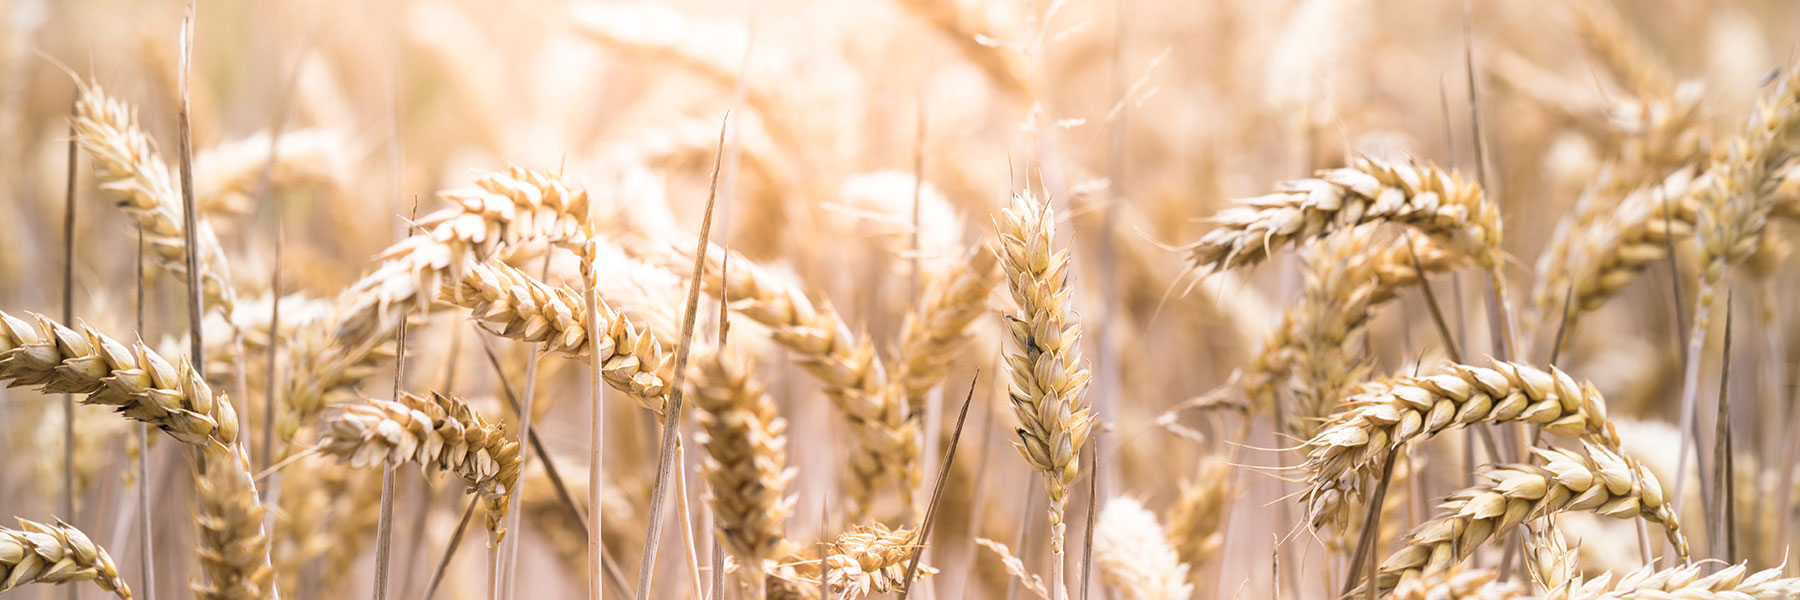 close up wheat field